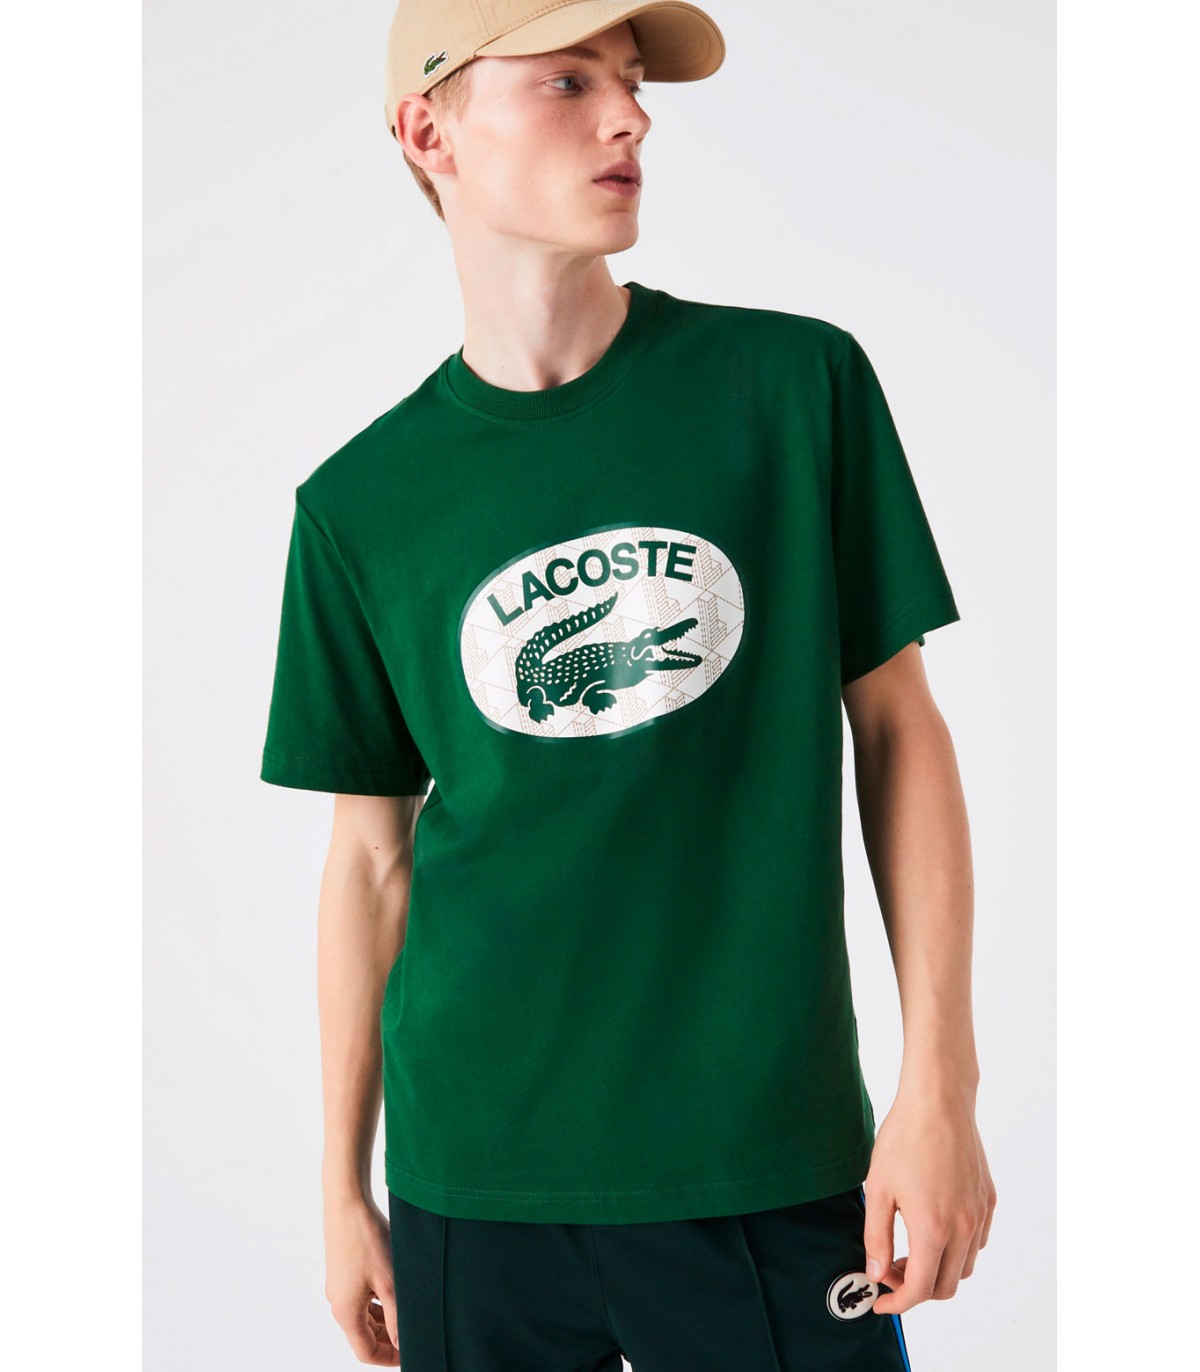 pase a ver Deducir cazar Camiseta Lacoste Regular Fit Verde